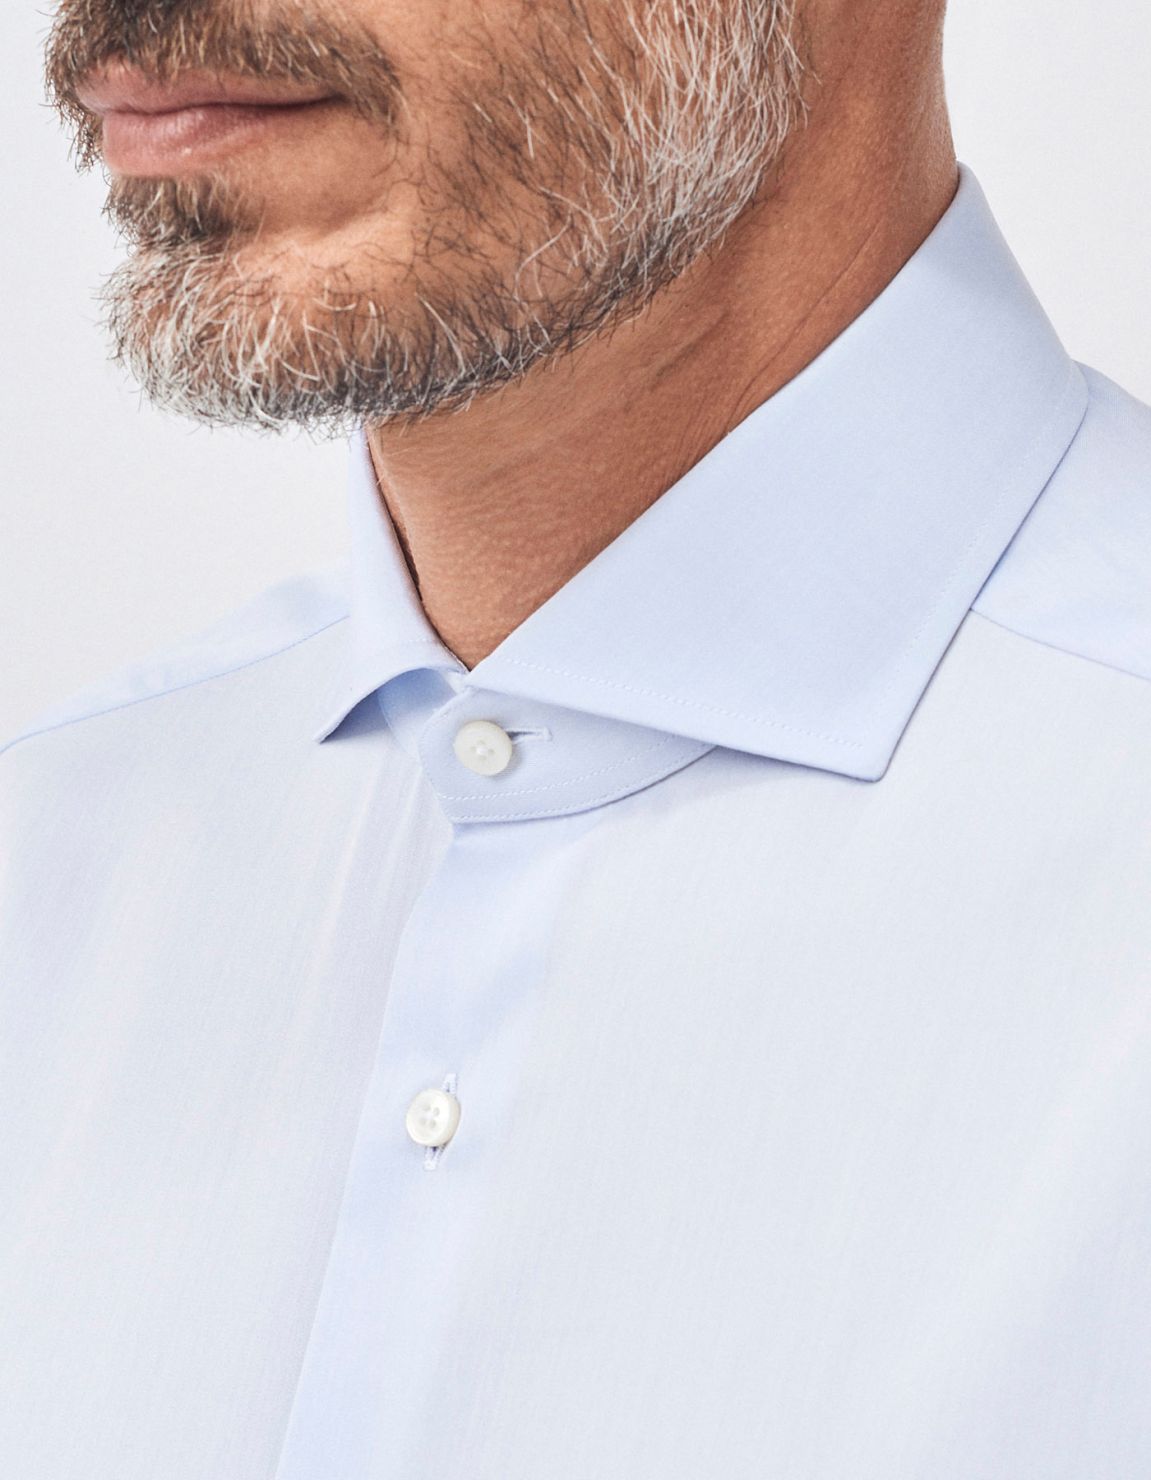 Shirt Collar cutaway Light Blue Twill Tailor Custom Fit 3